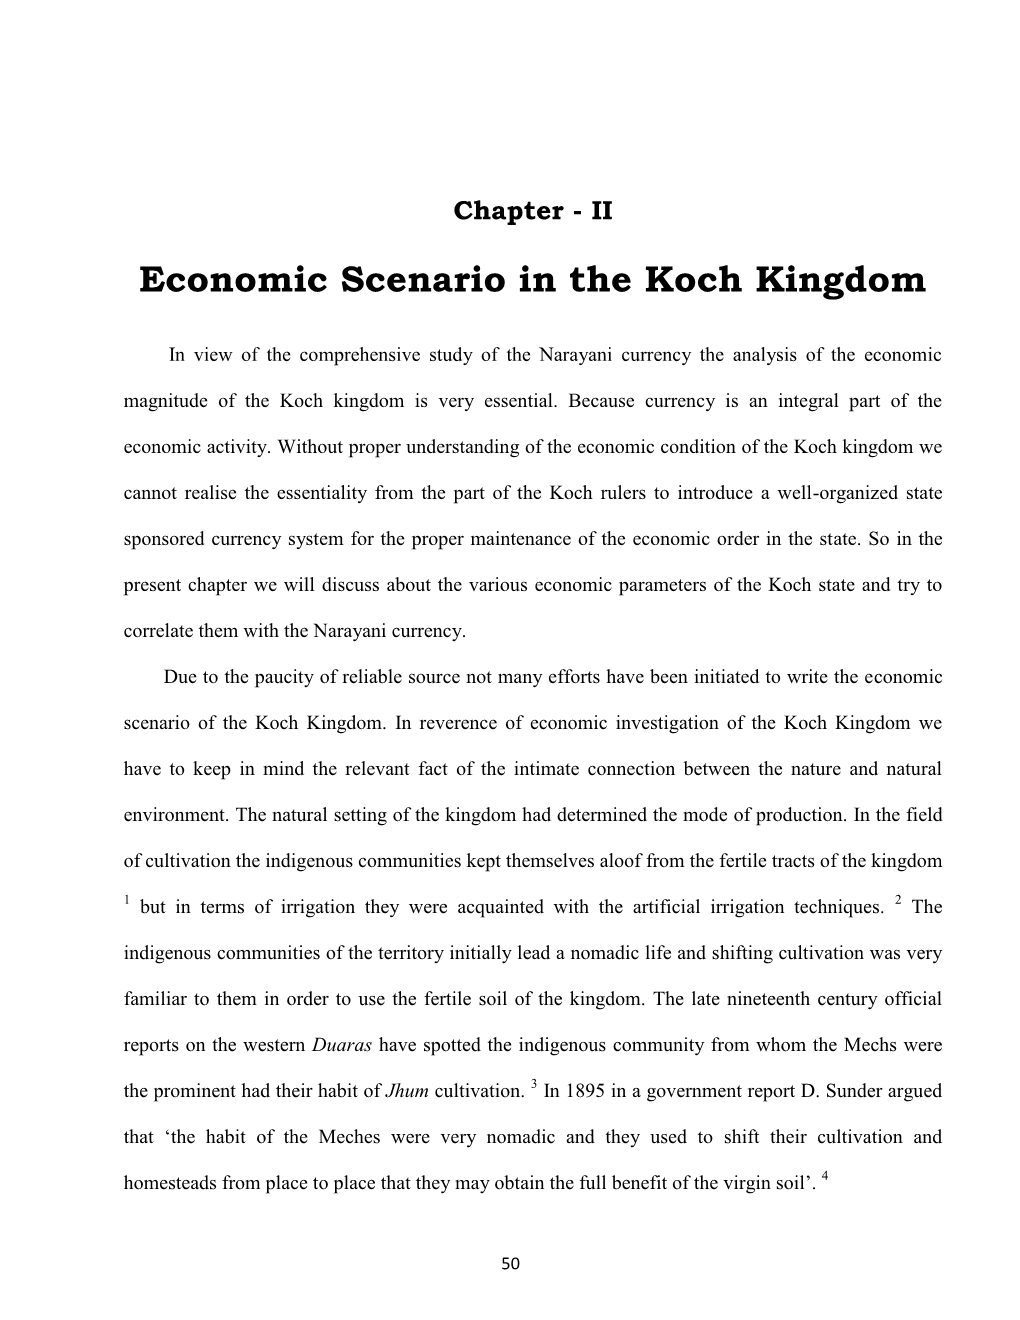 Economic Scenario in the Koch Kingdom